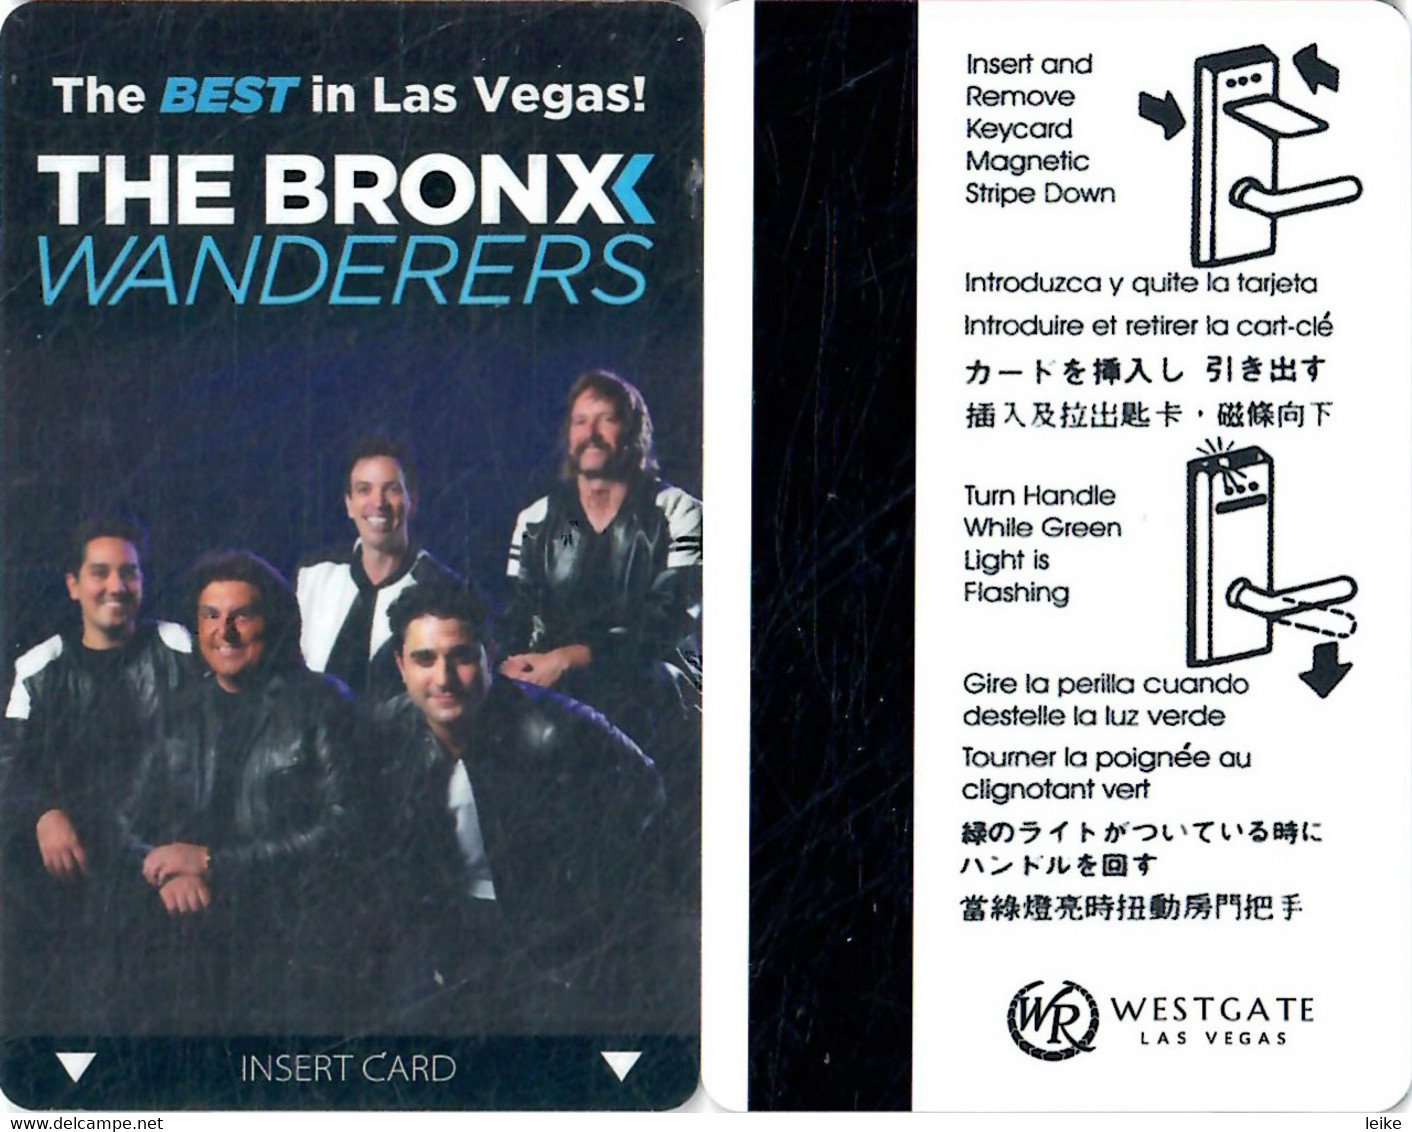 Vdara Hotel & Spa Las Vegas-3268 -- Las Vegas- Las Vegas- Las Vegas Las Vegas- Hotelkarte, Hotel Key Card, Roomkey - Cartes D'hotel